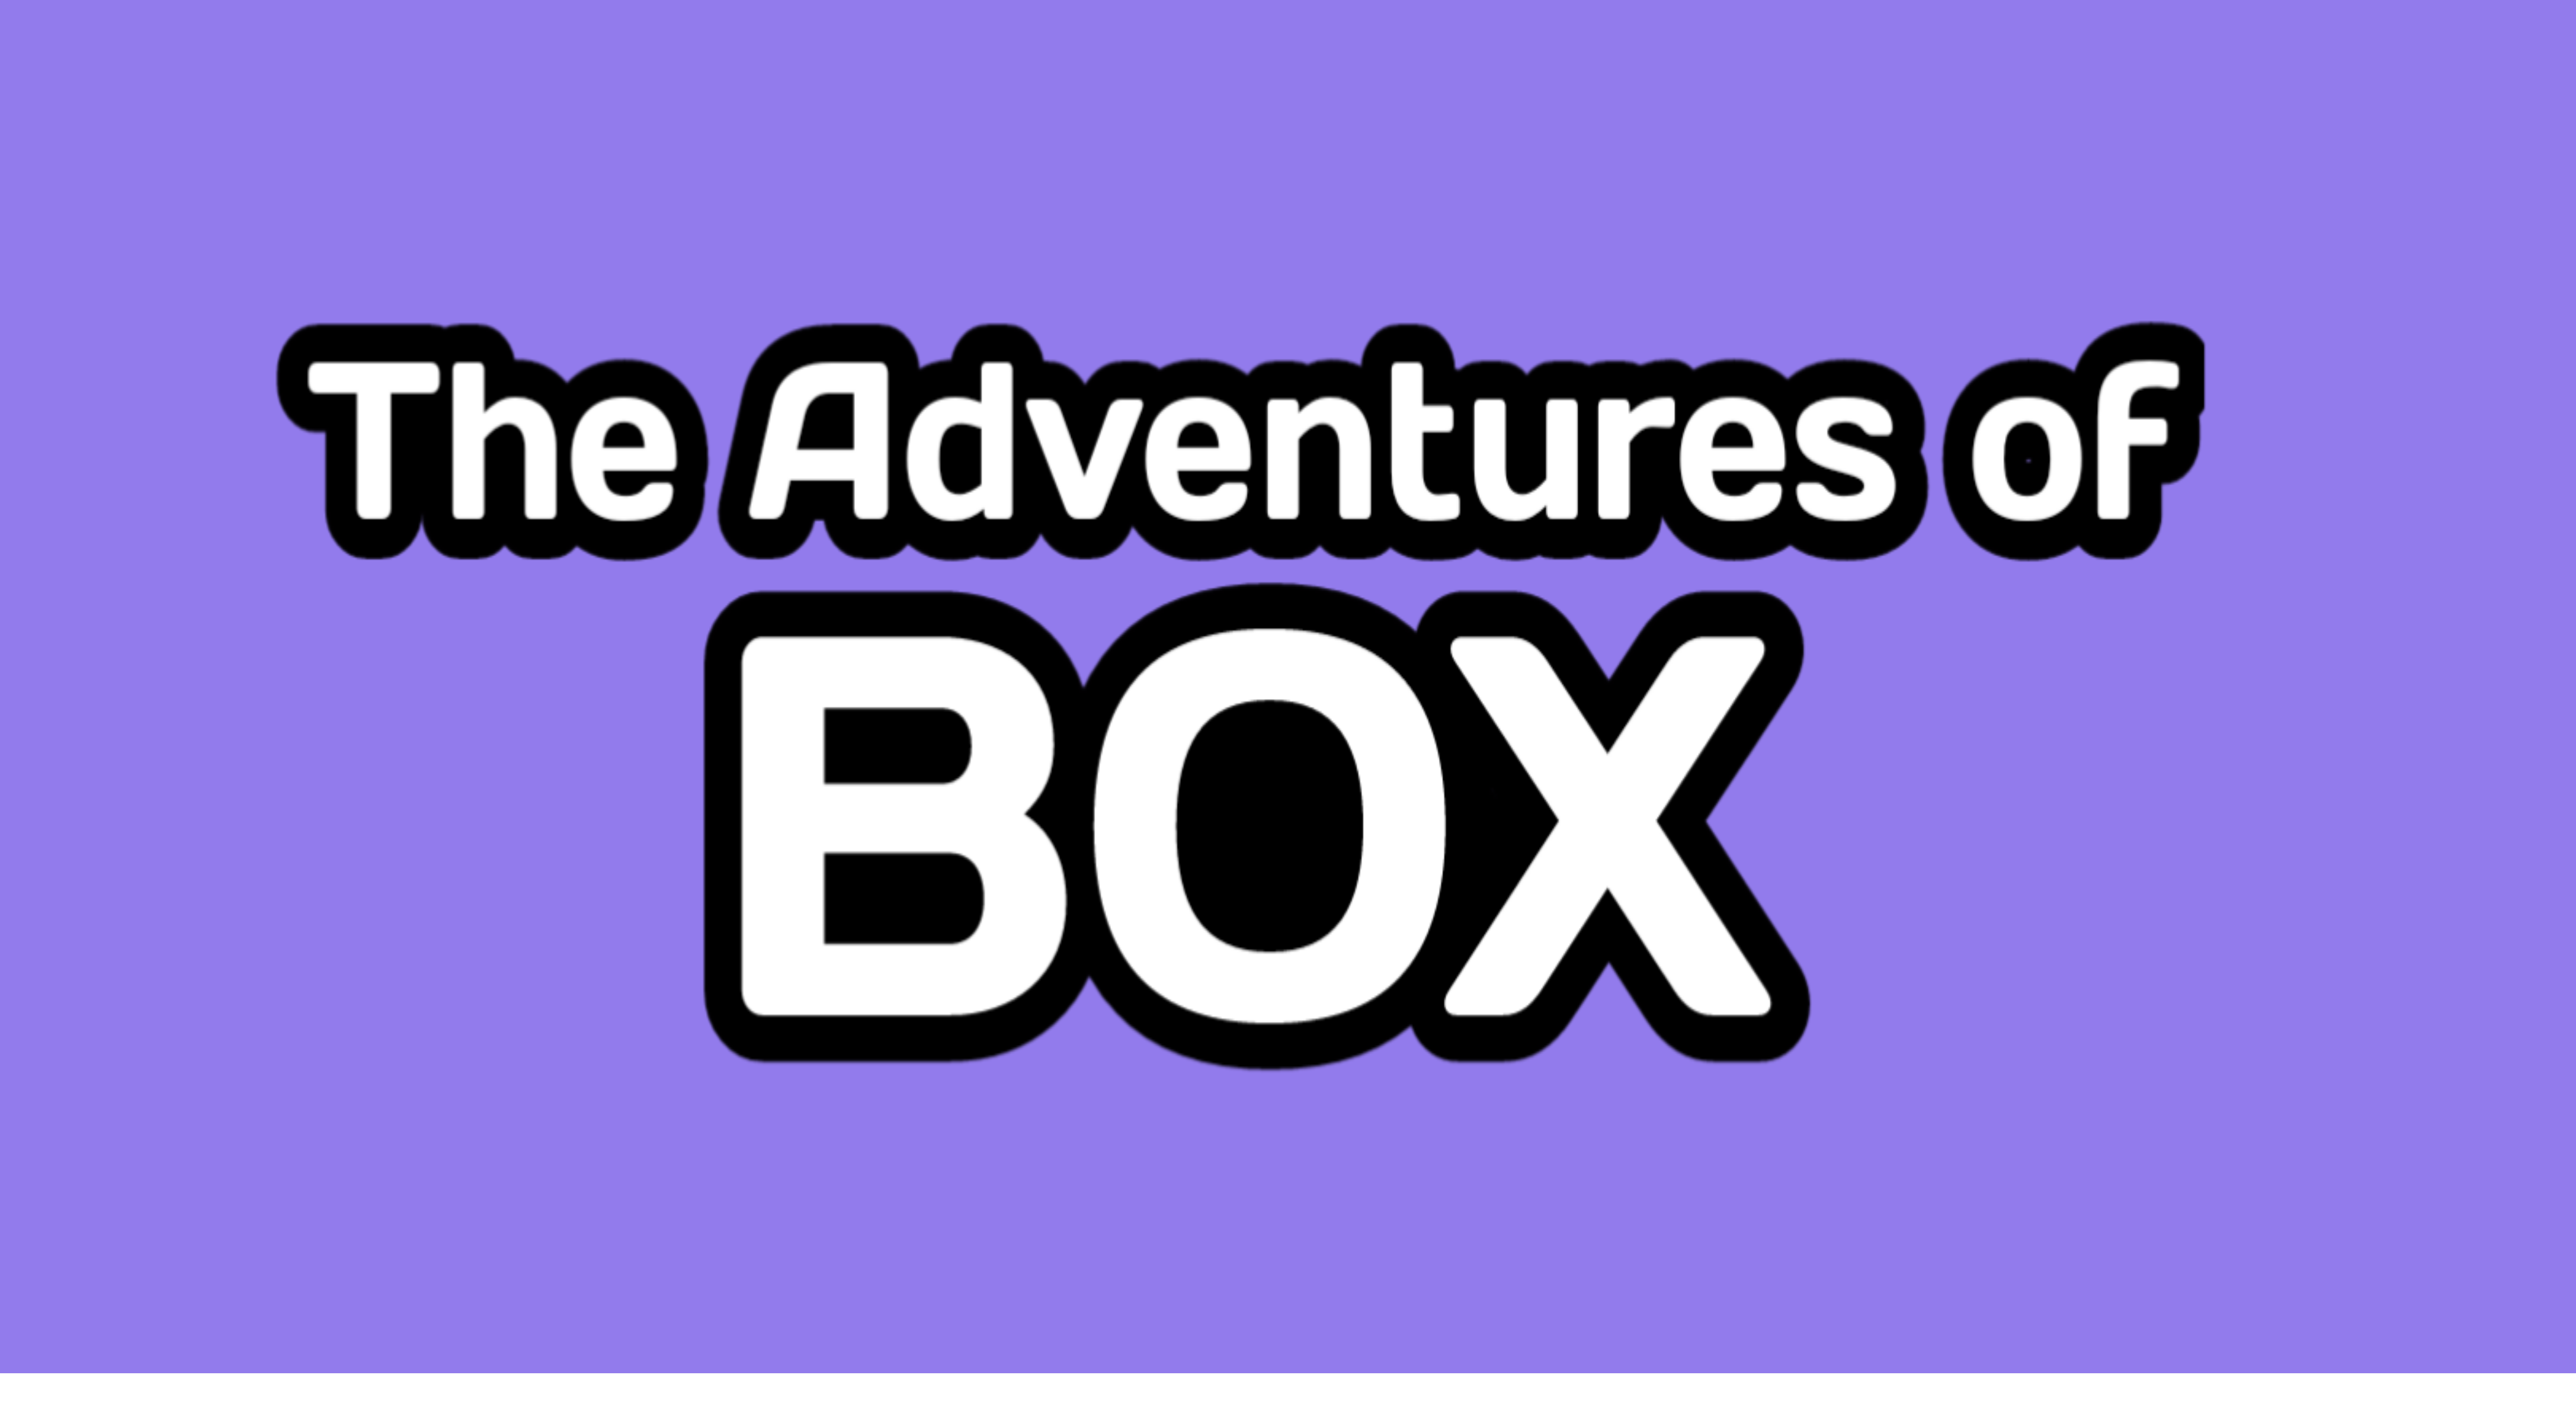 The Adventures of Box